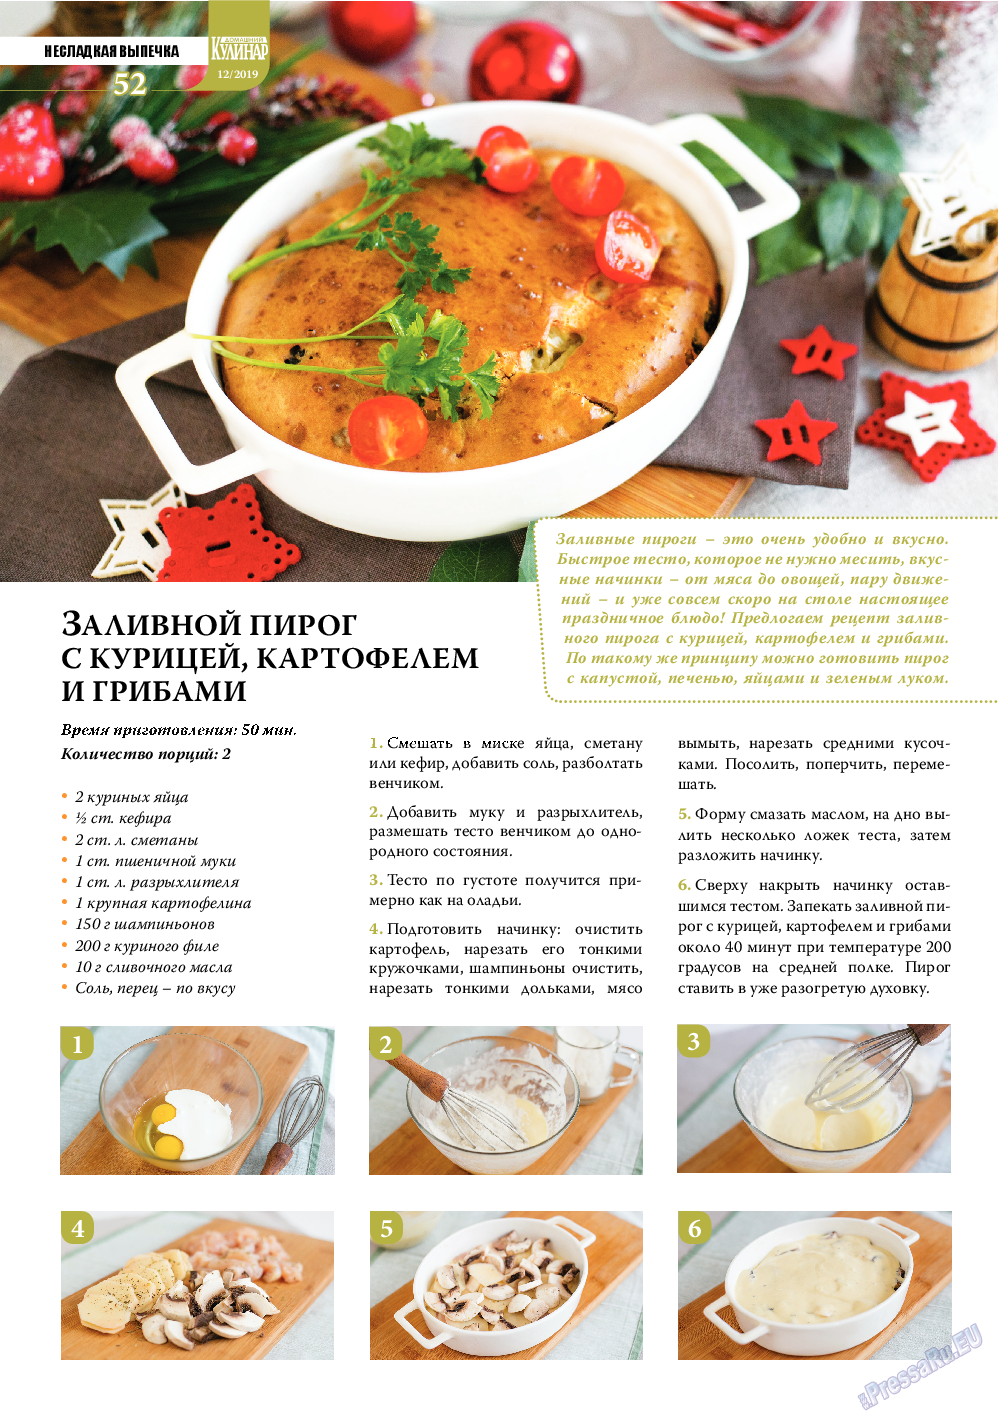 Домашний кулинар (журнал). 2019 год, номер 12, стр. 52